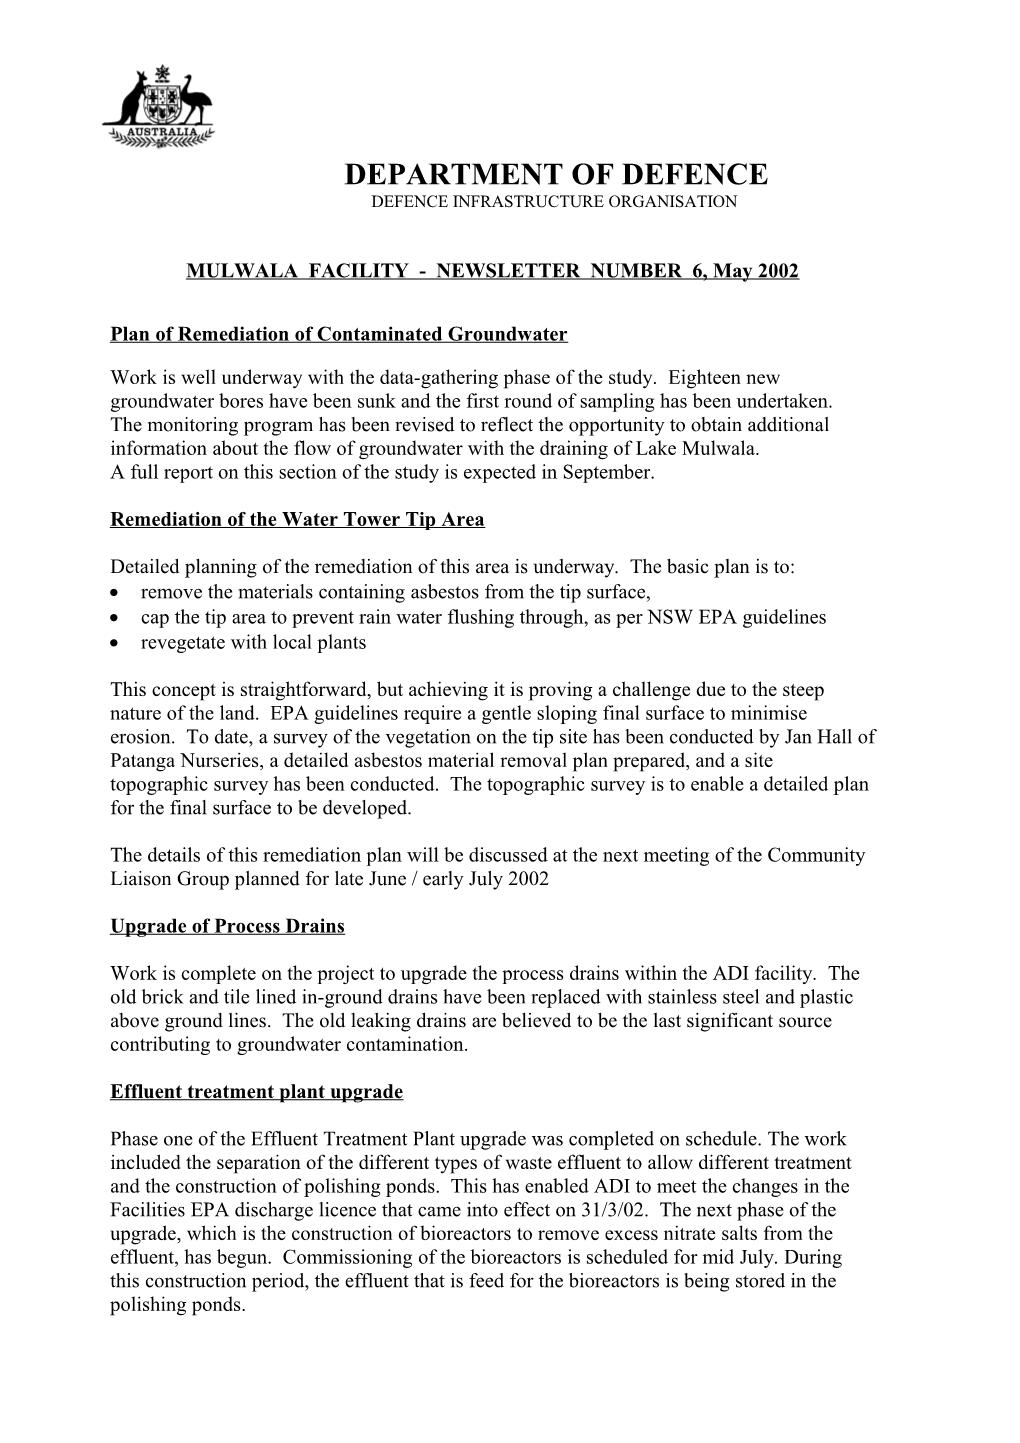 Mulwala Facility - Newsletter Number 5